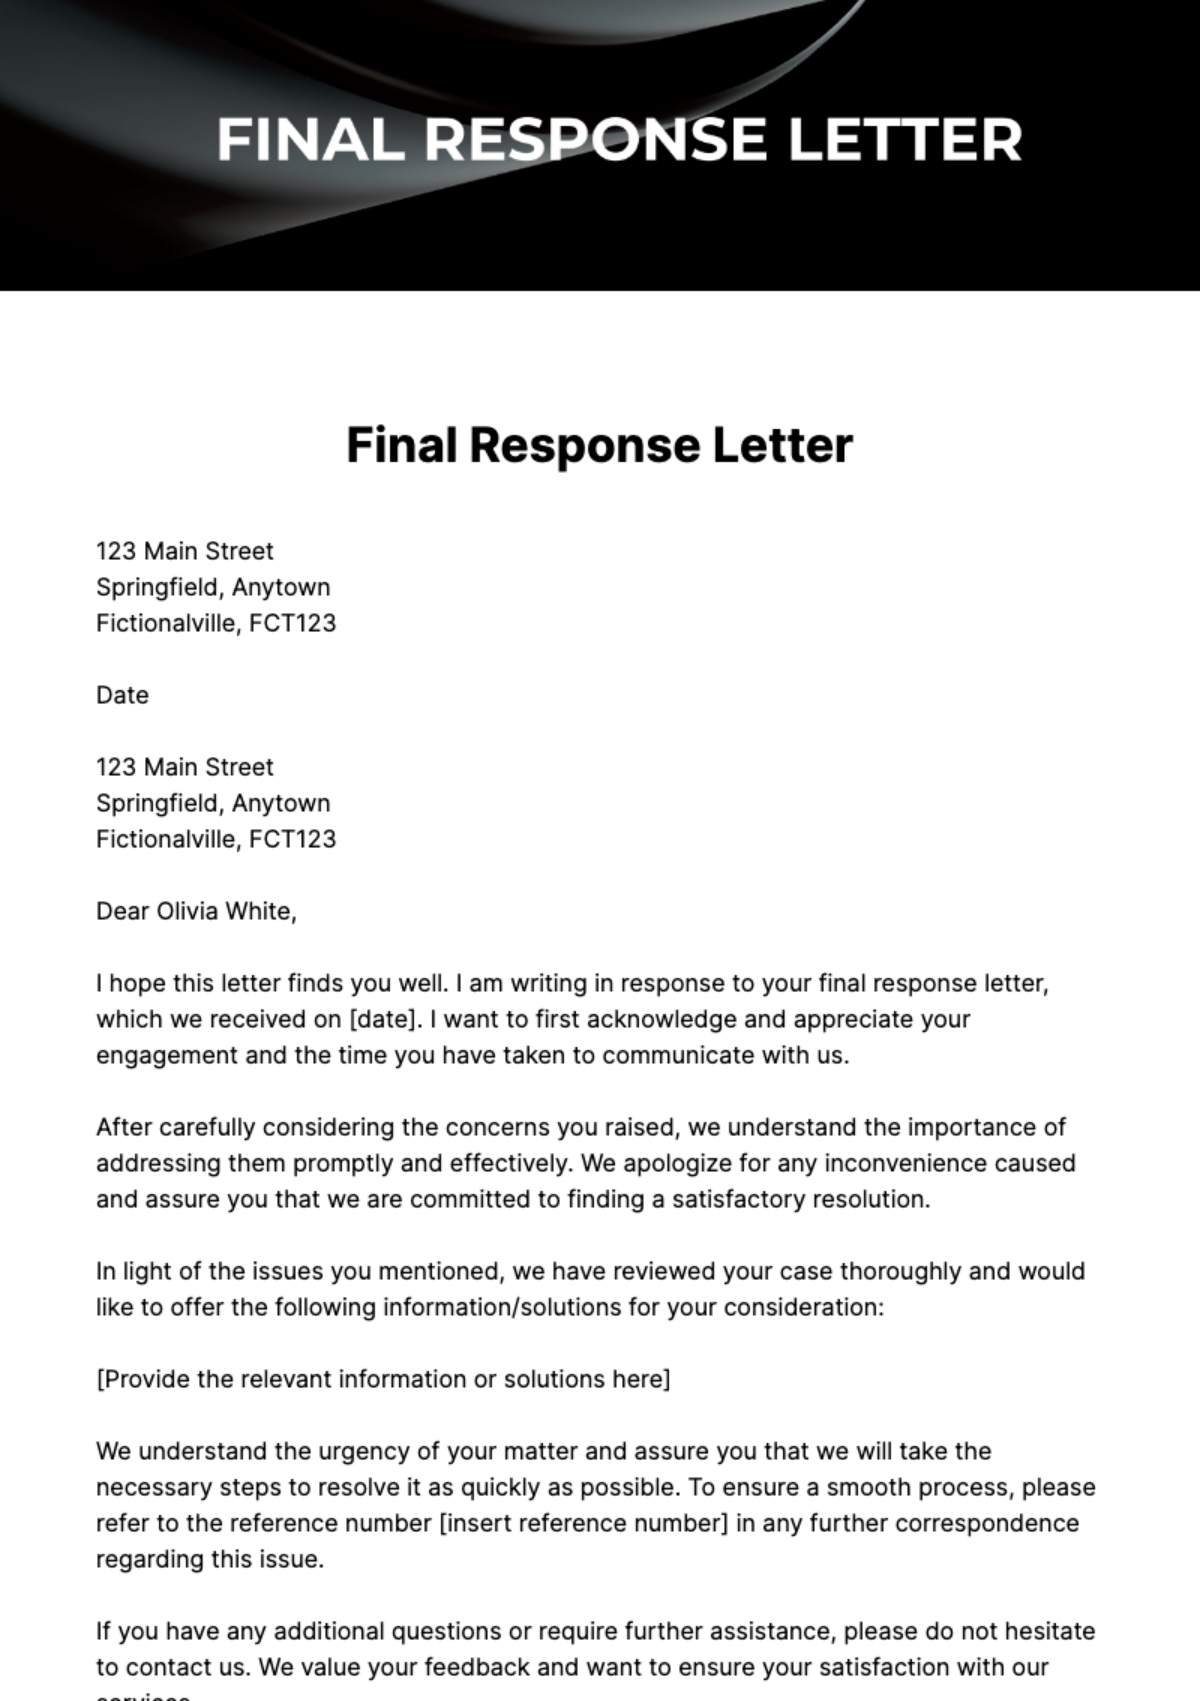 Final Response Letter Template